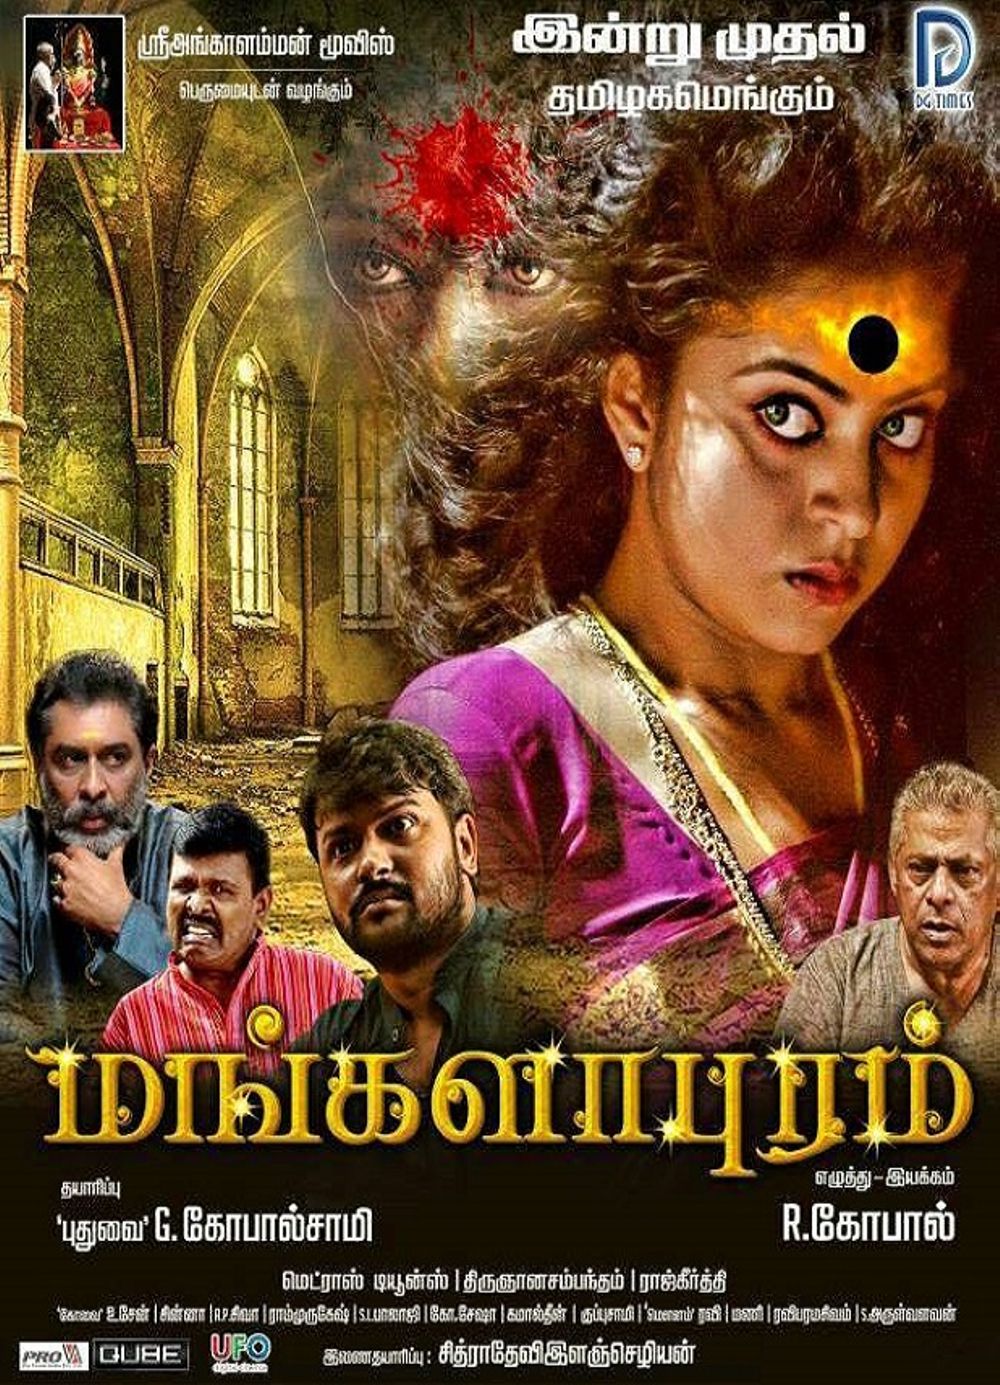 Mangalapuram Movie Review